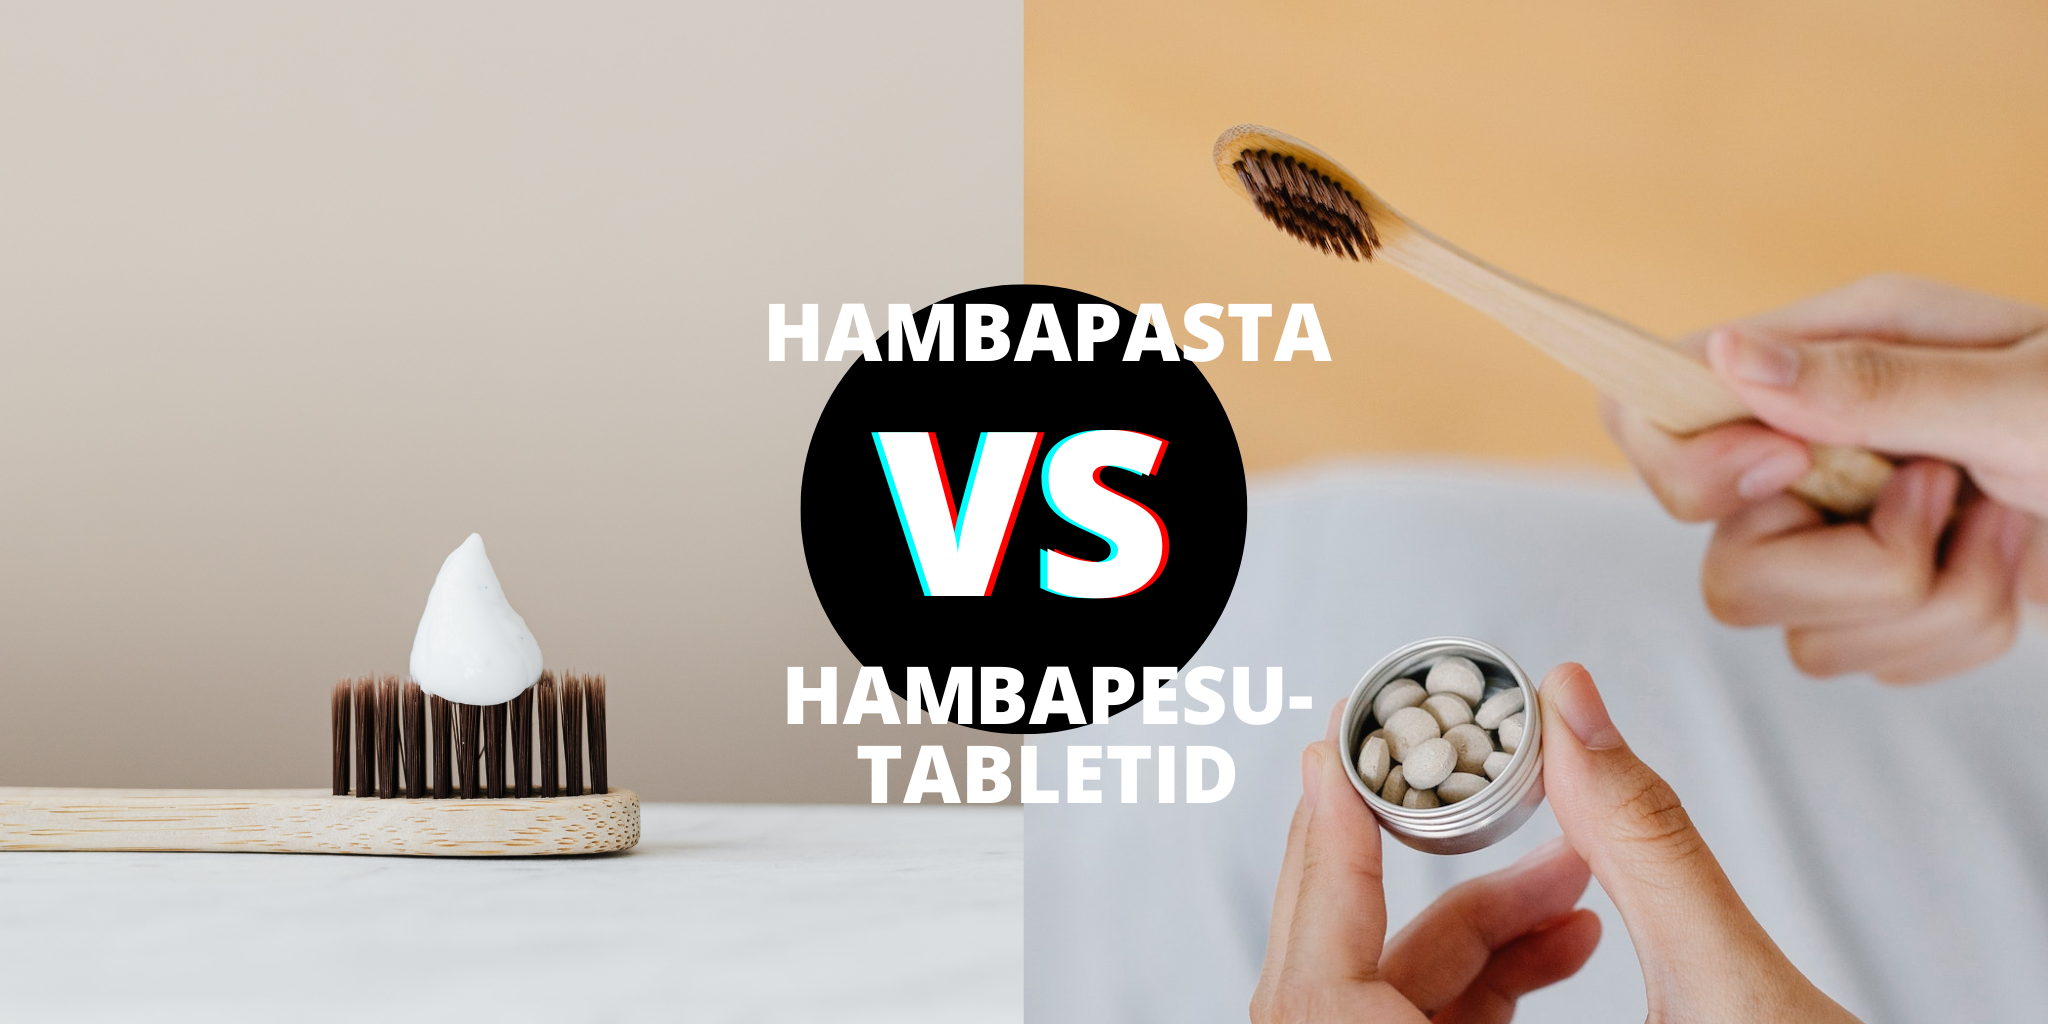 You are currently viewing Hambapasta vs hambapesutabletid